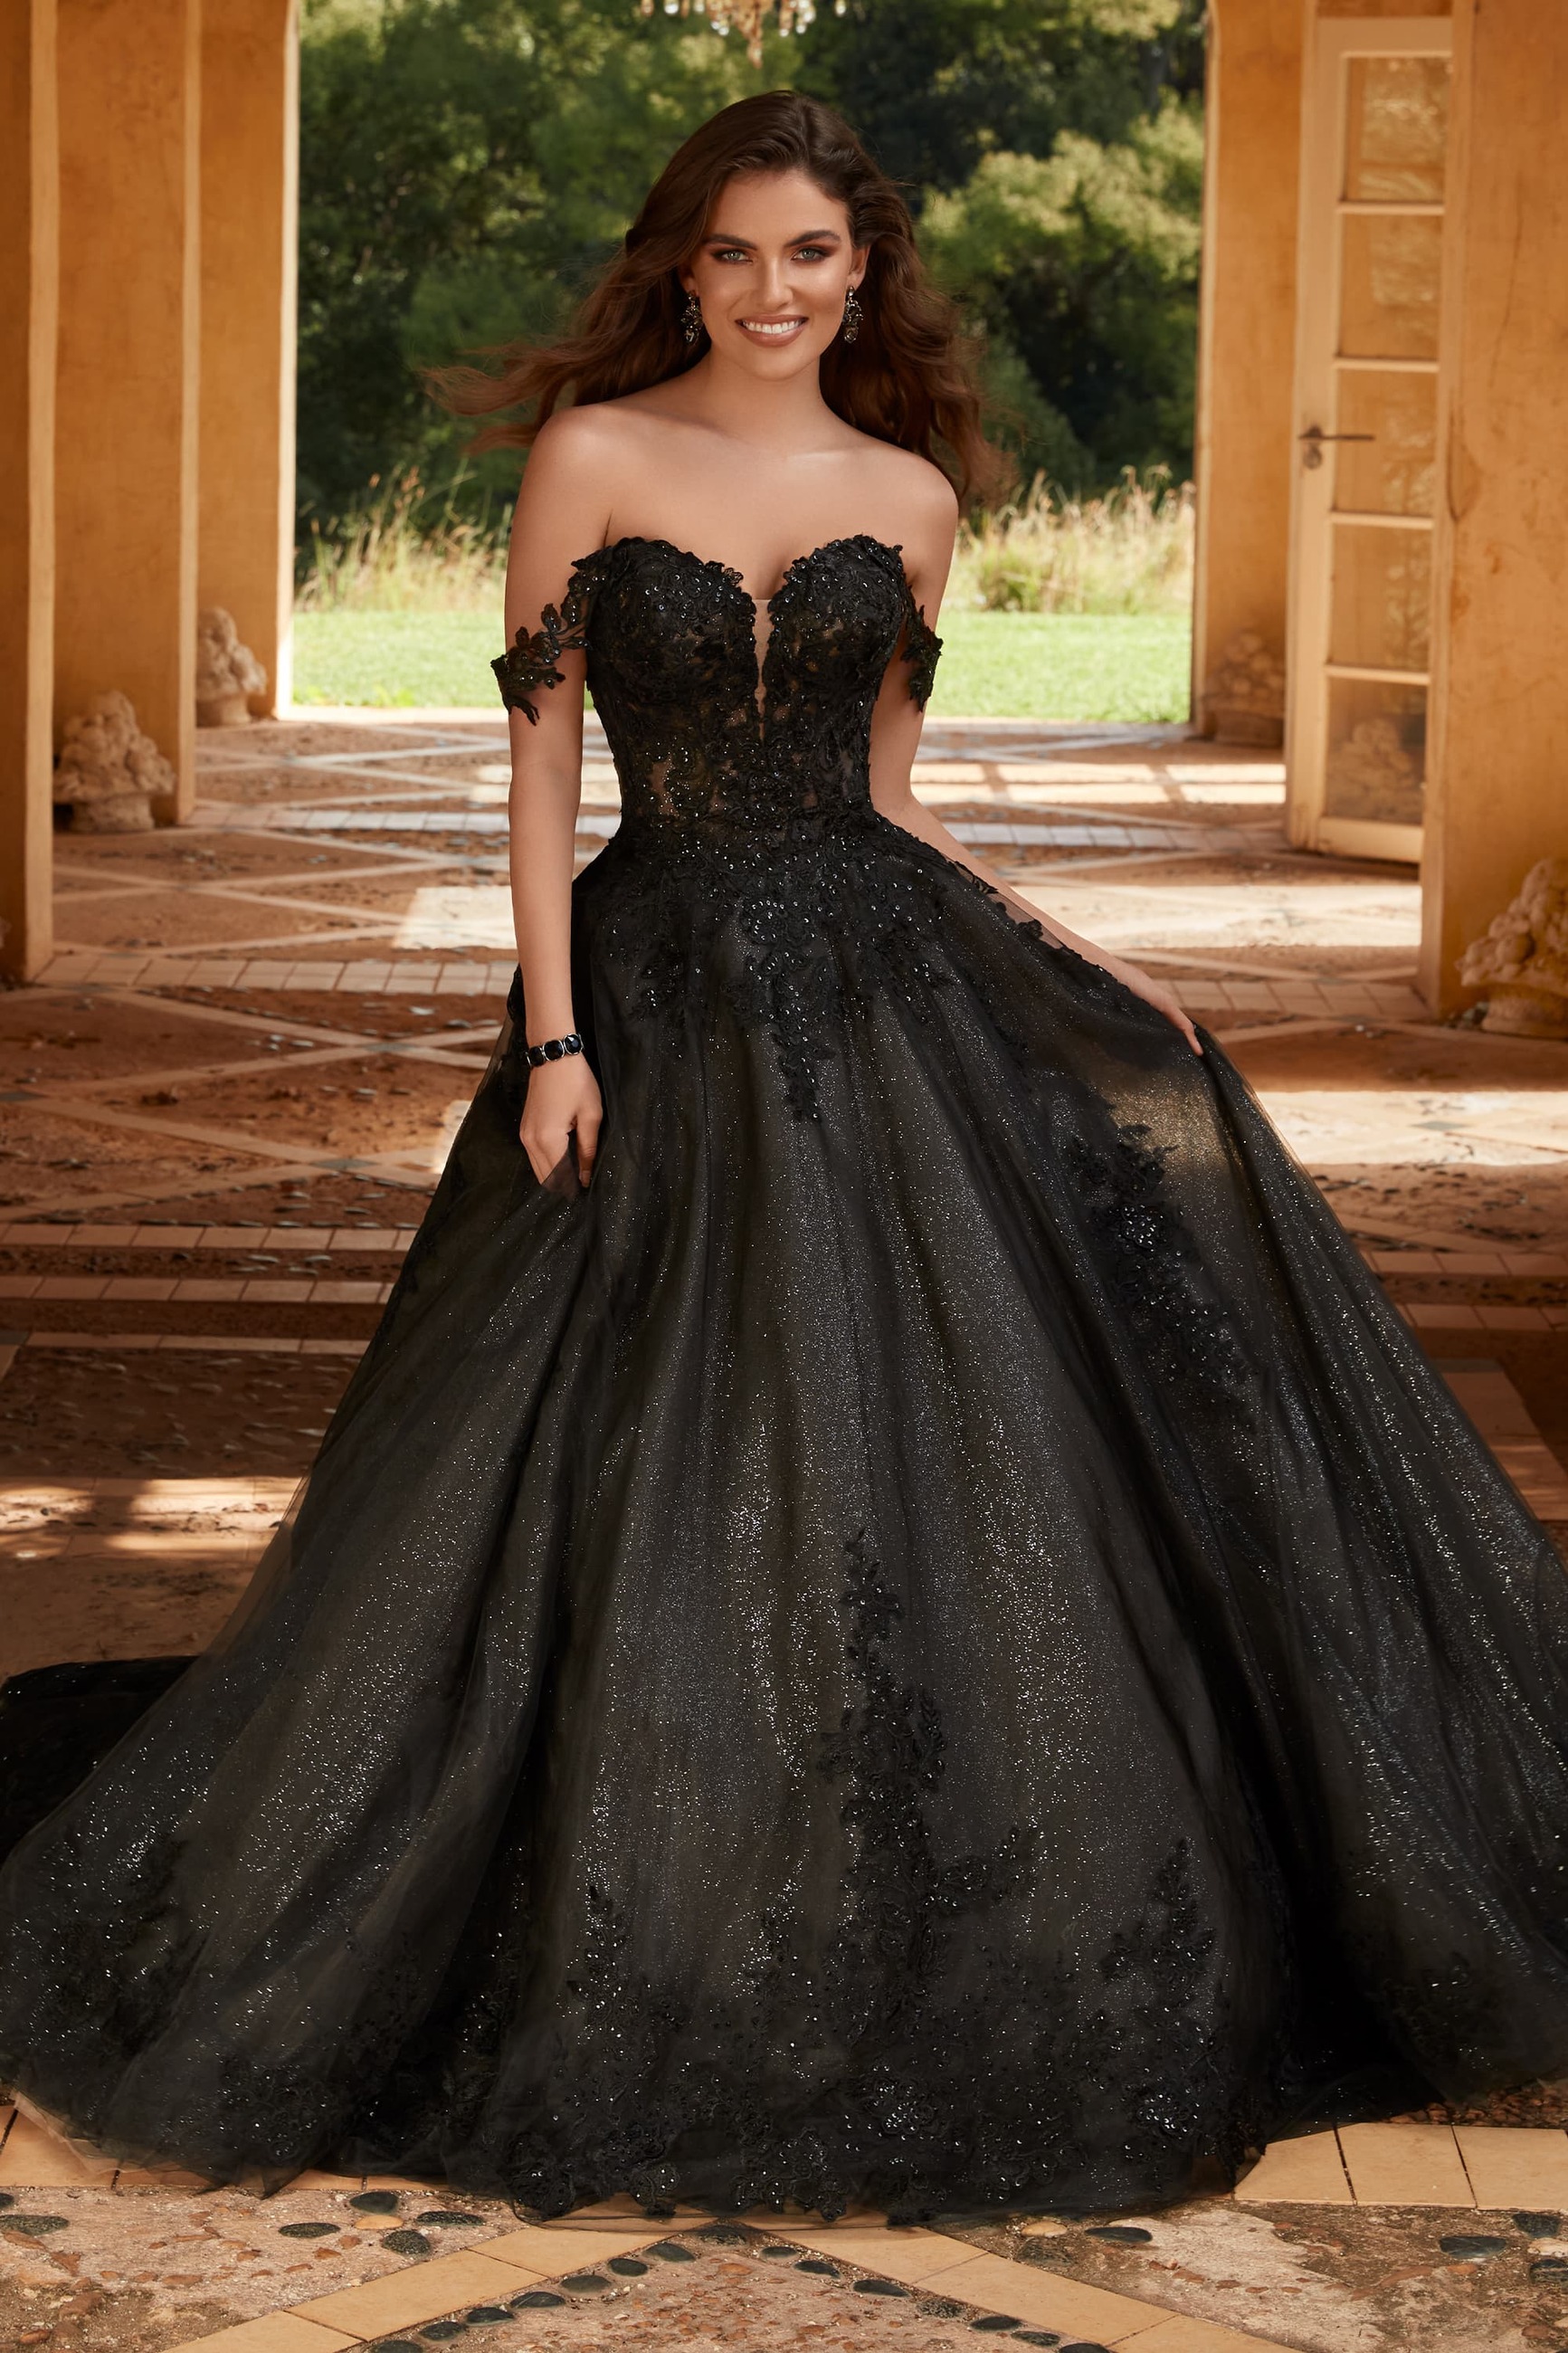 The Rare Black Rose Wedding Dress | Goth Mall